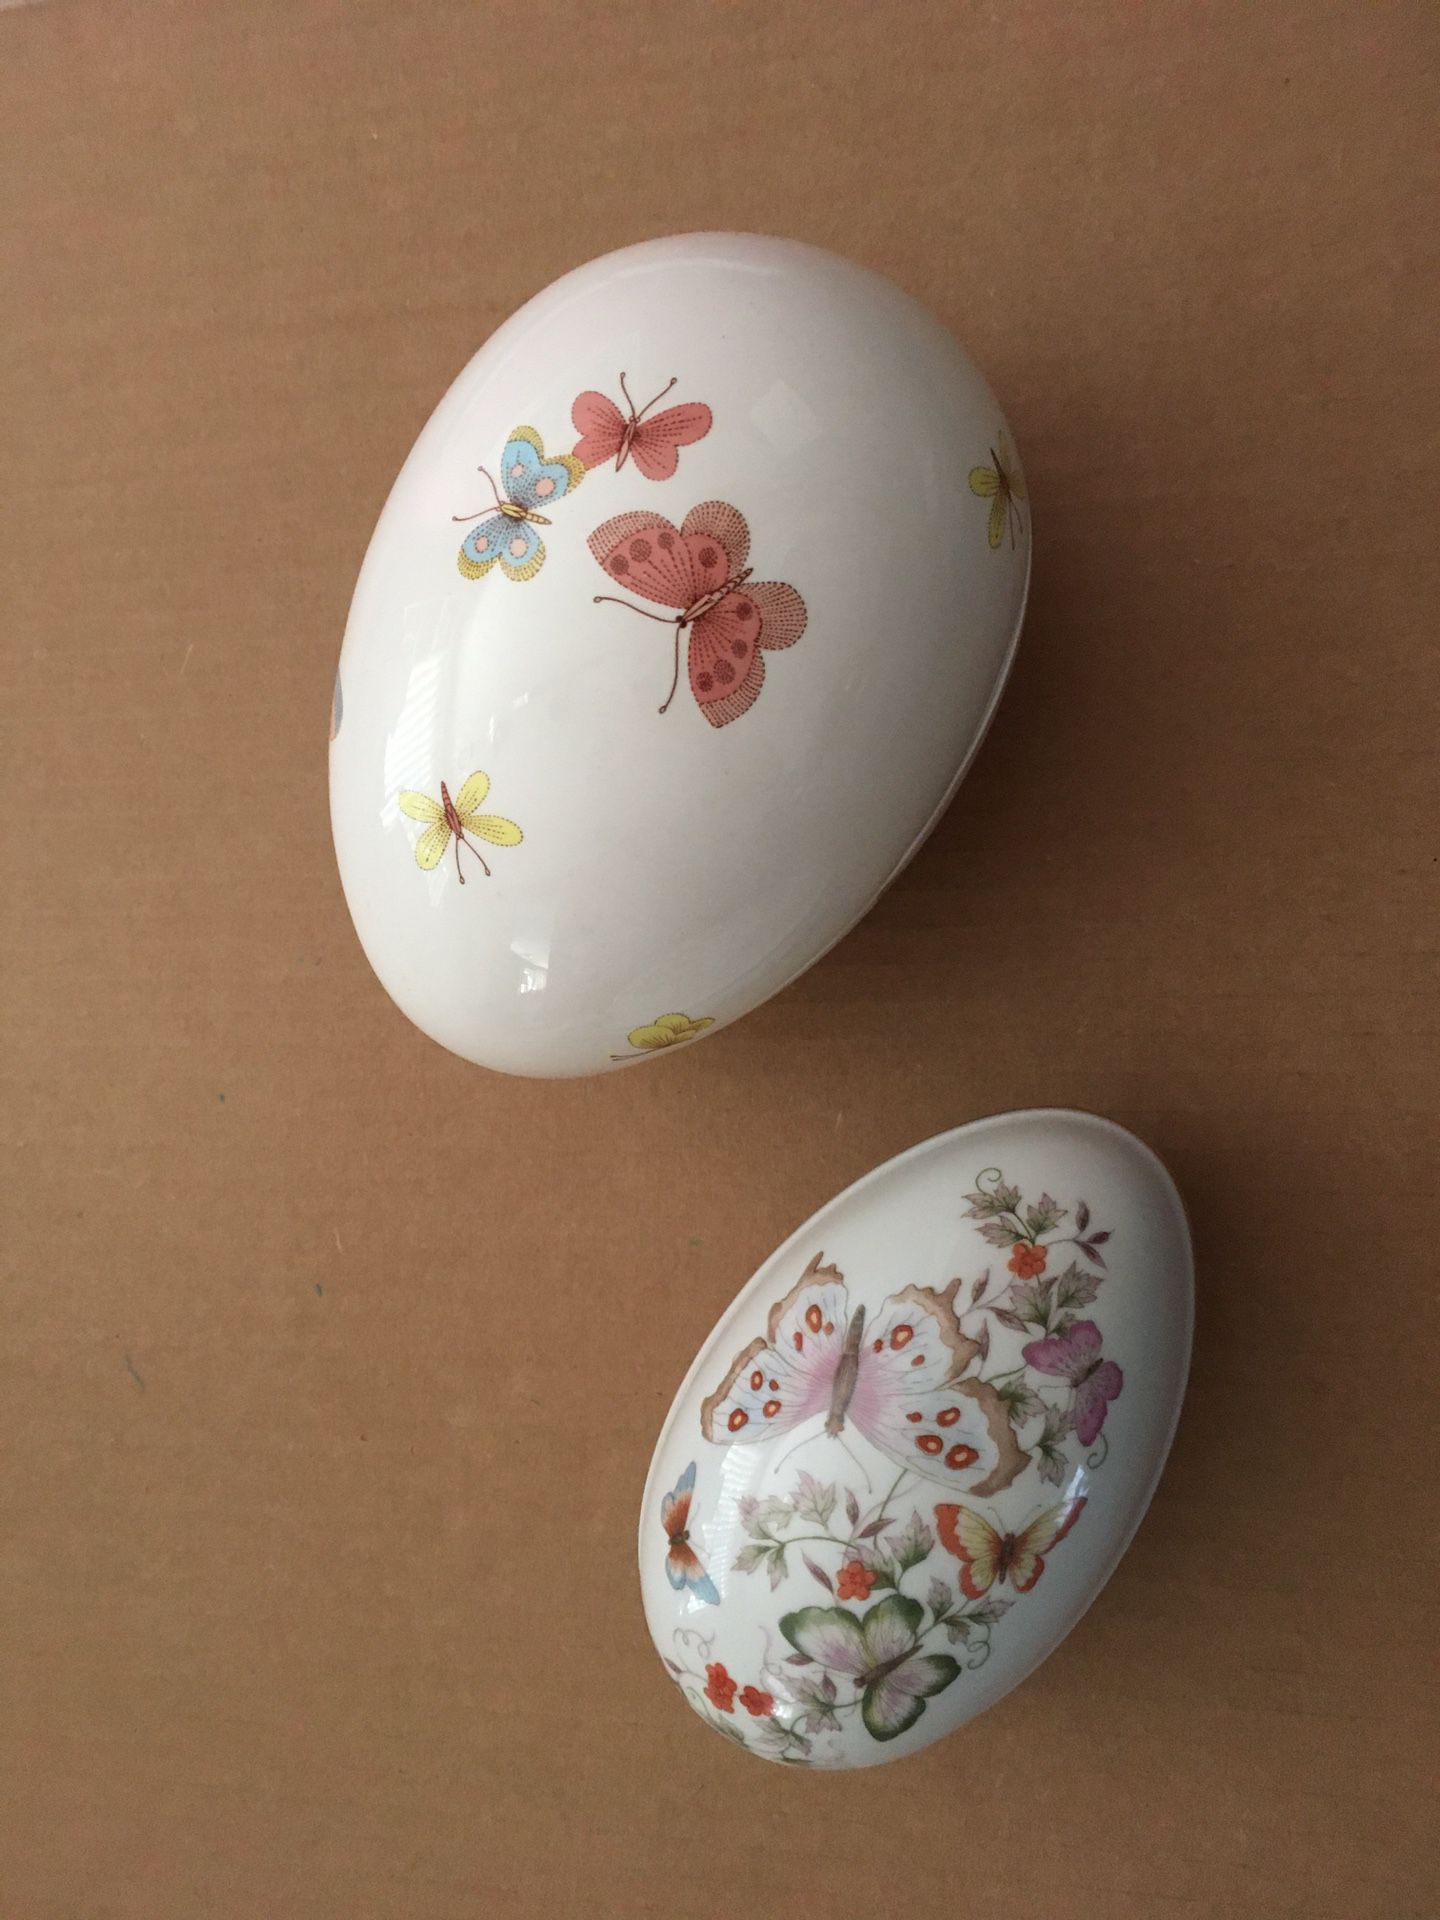 Fitz and Floyd porcelain egg